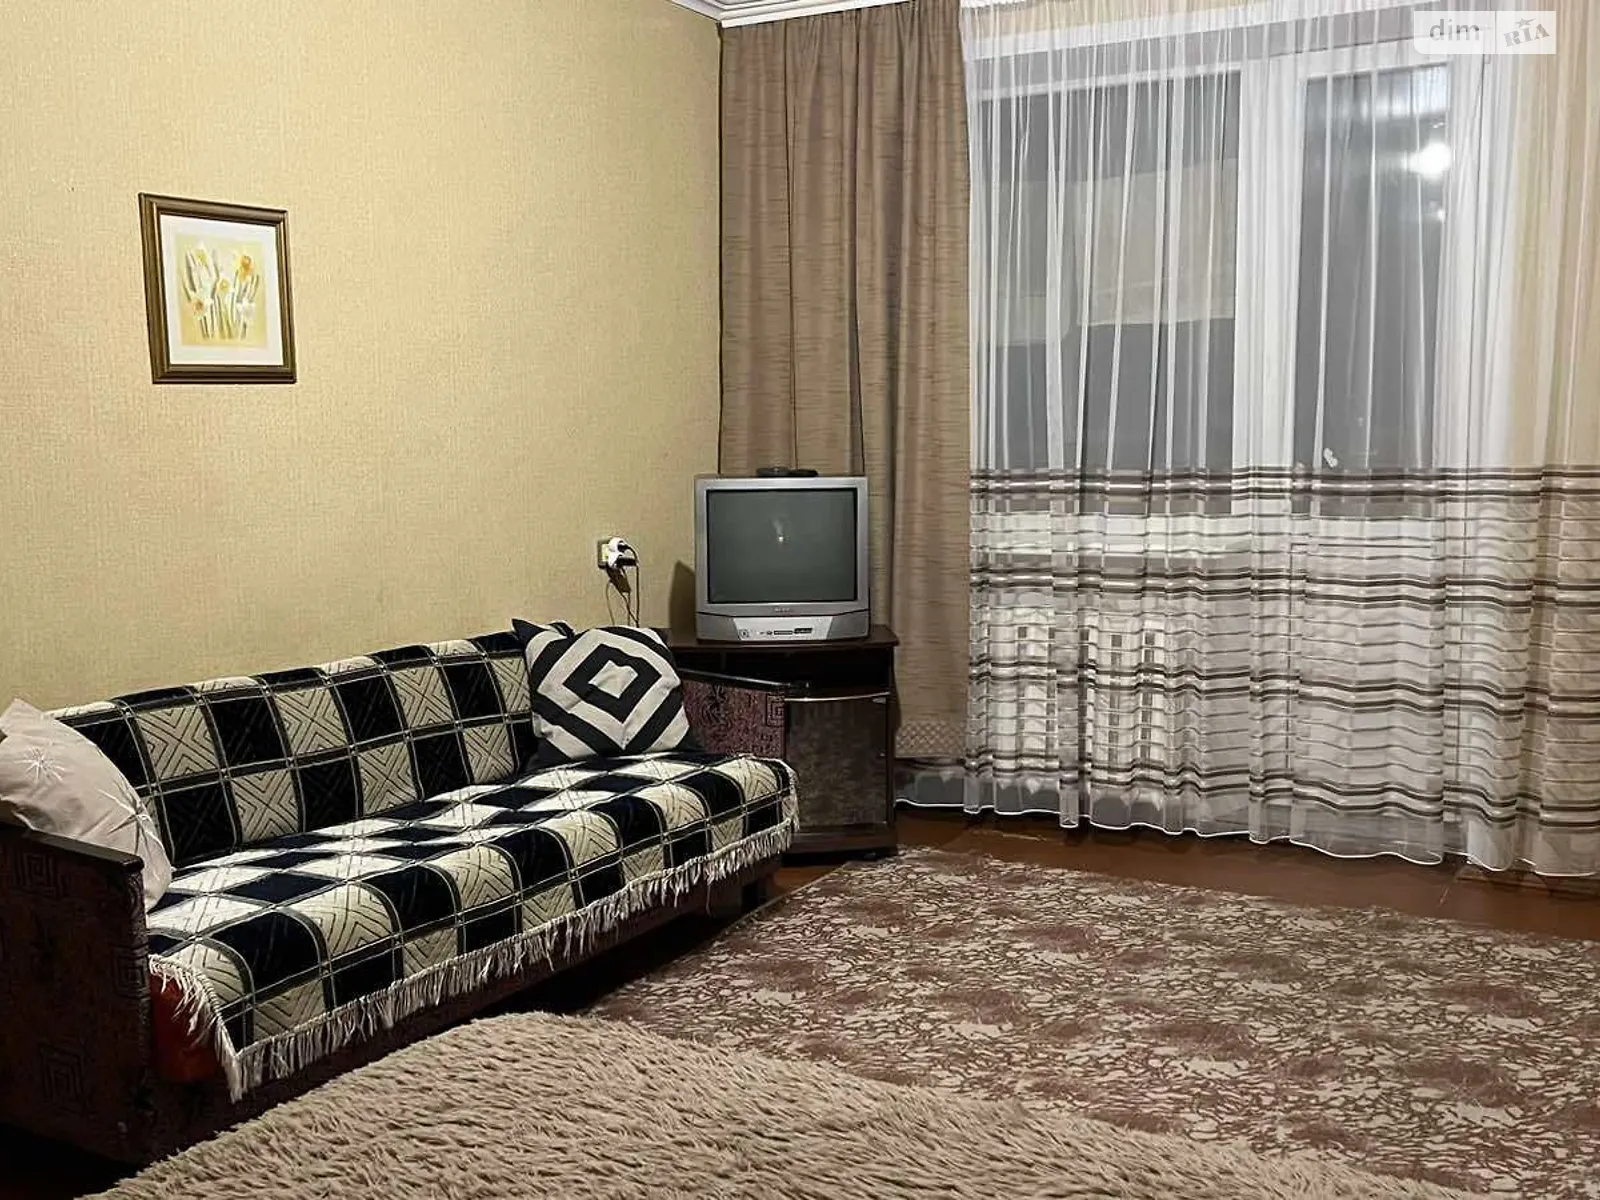 1-кімнатна квартира у Запоріжжі, цена: 600 грн